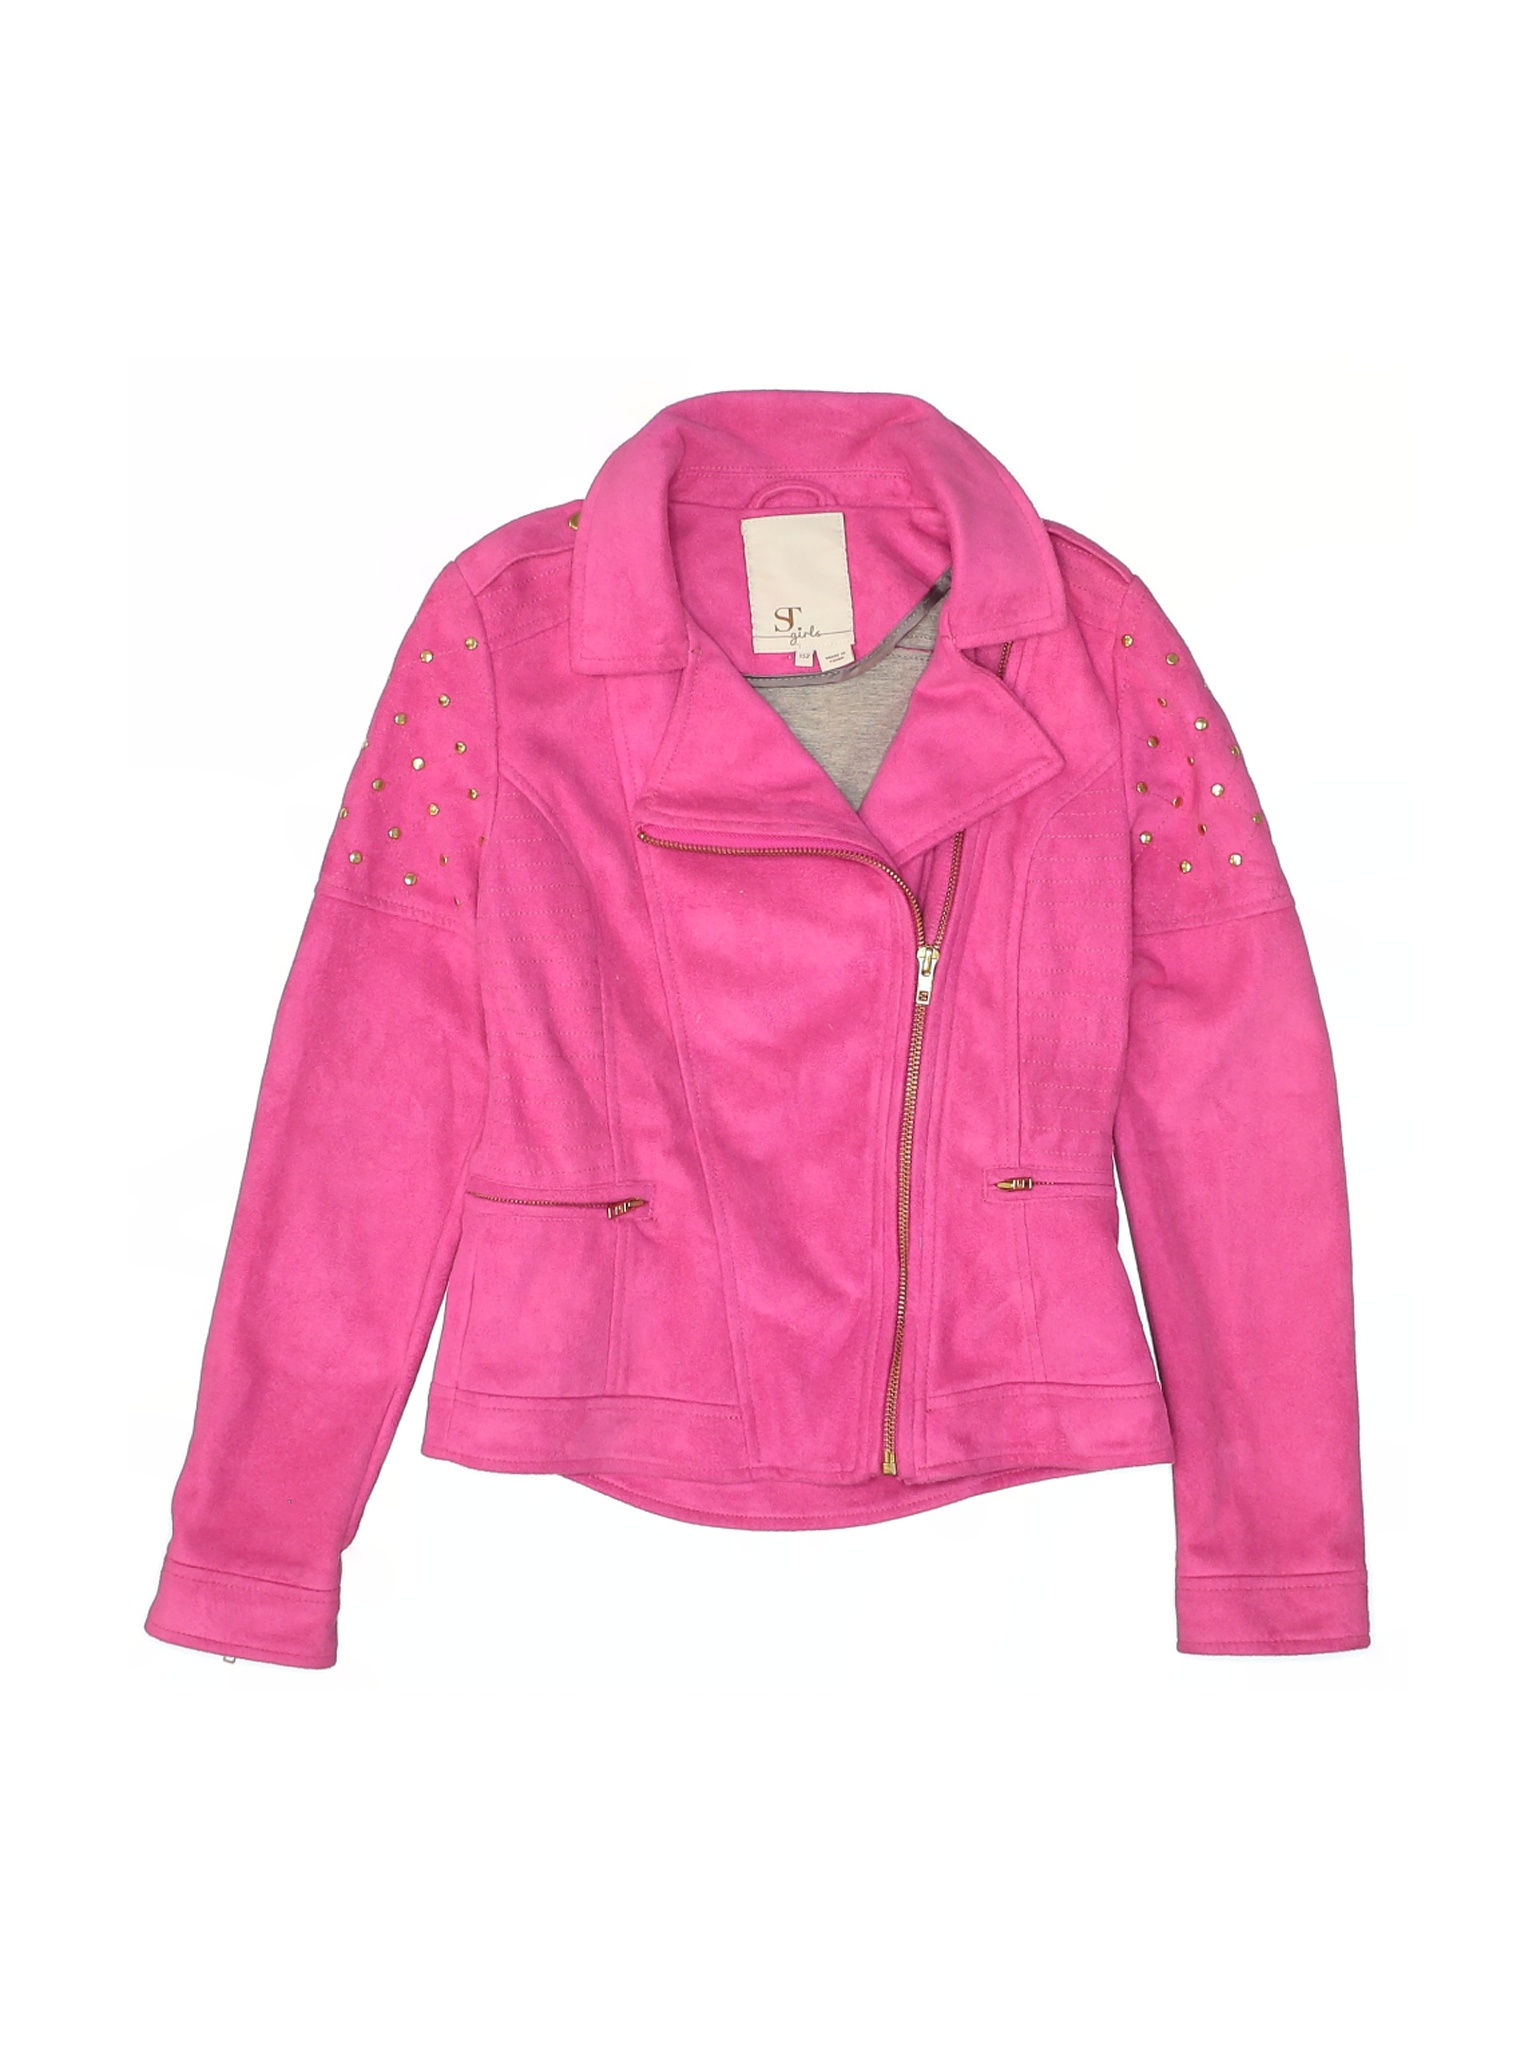 ST Girls Girls Pink Jacket 150 cm | eBay